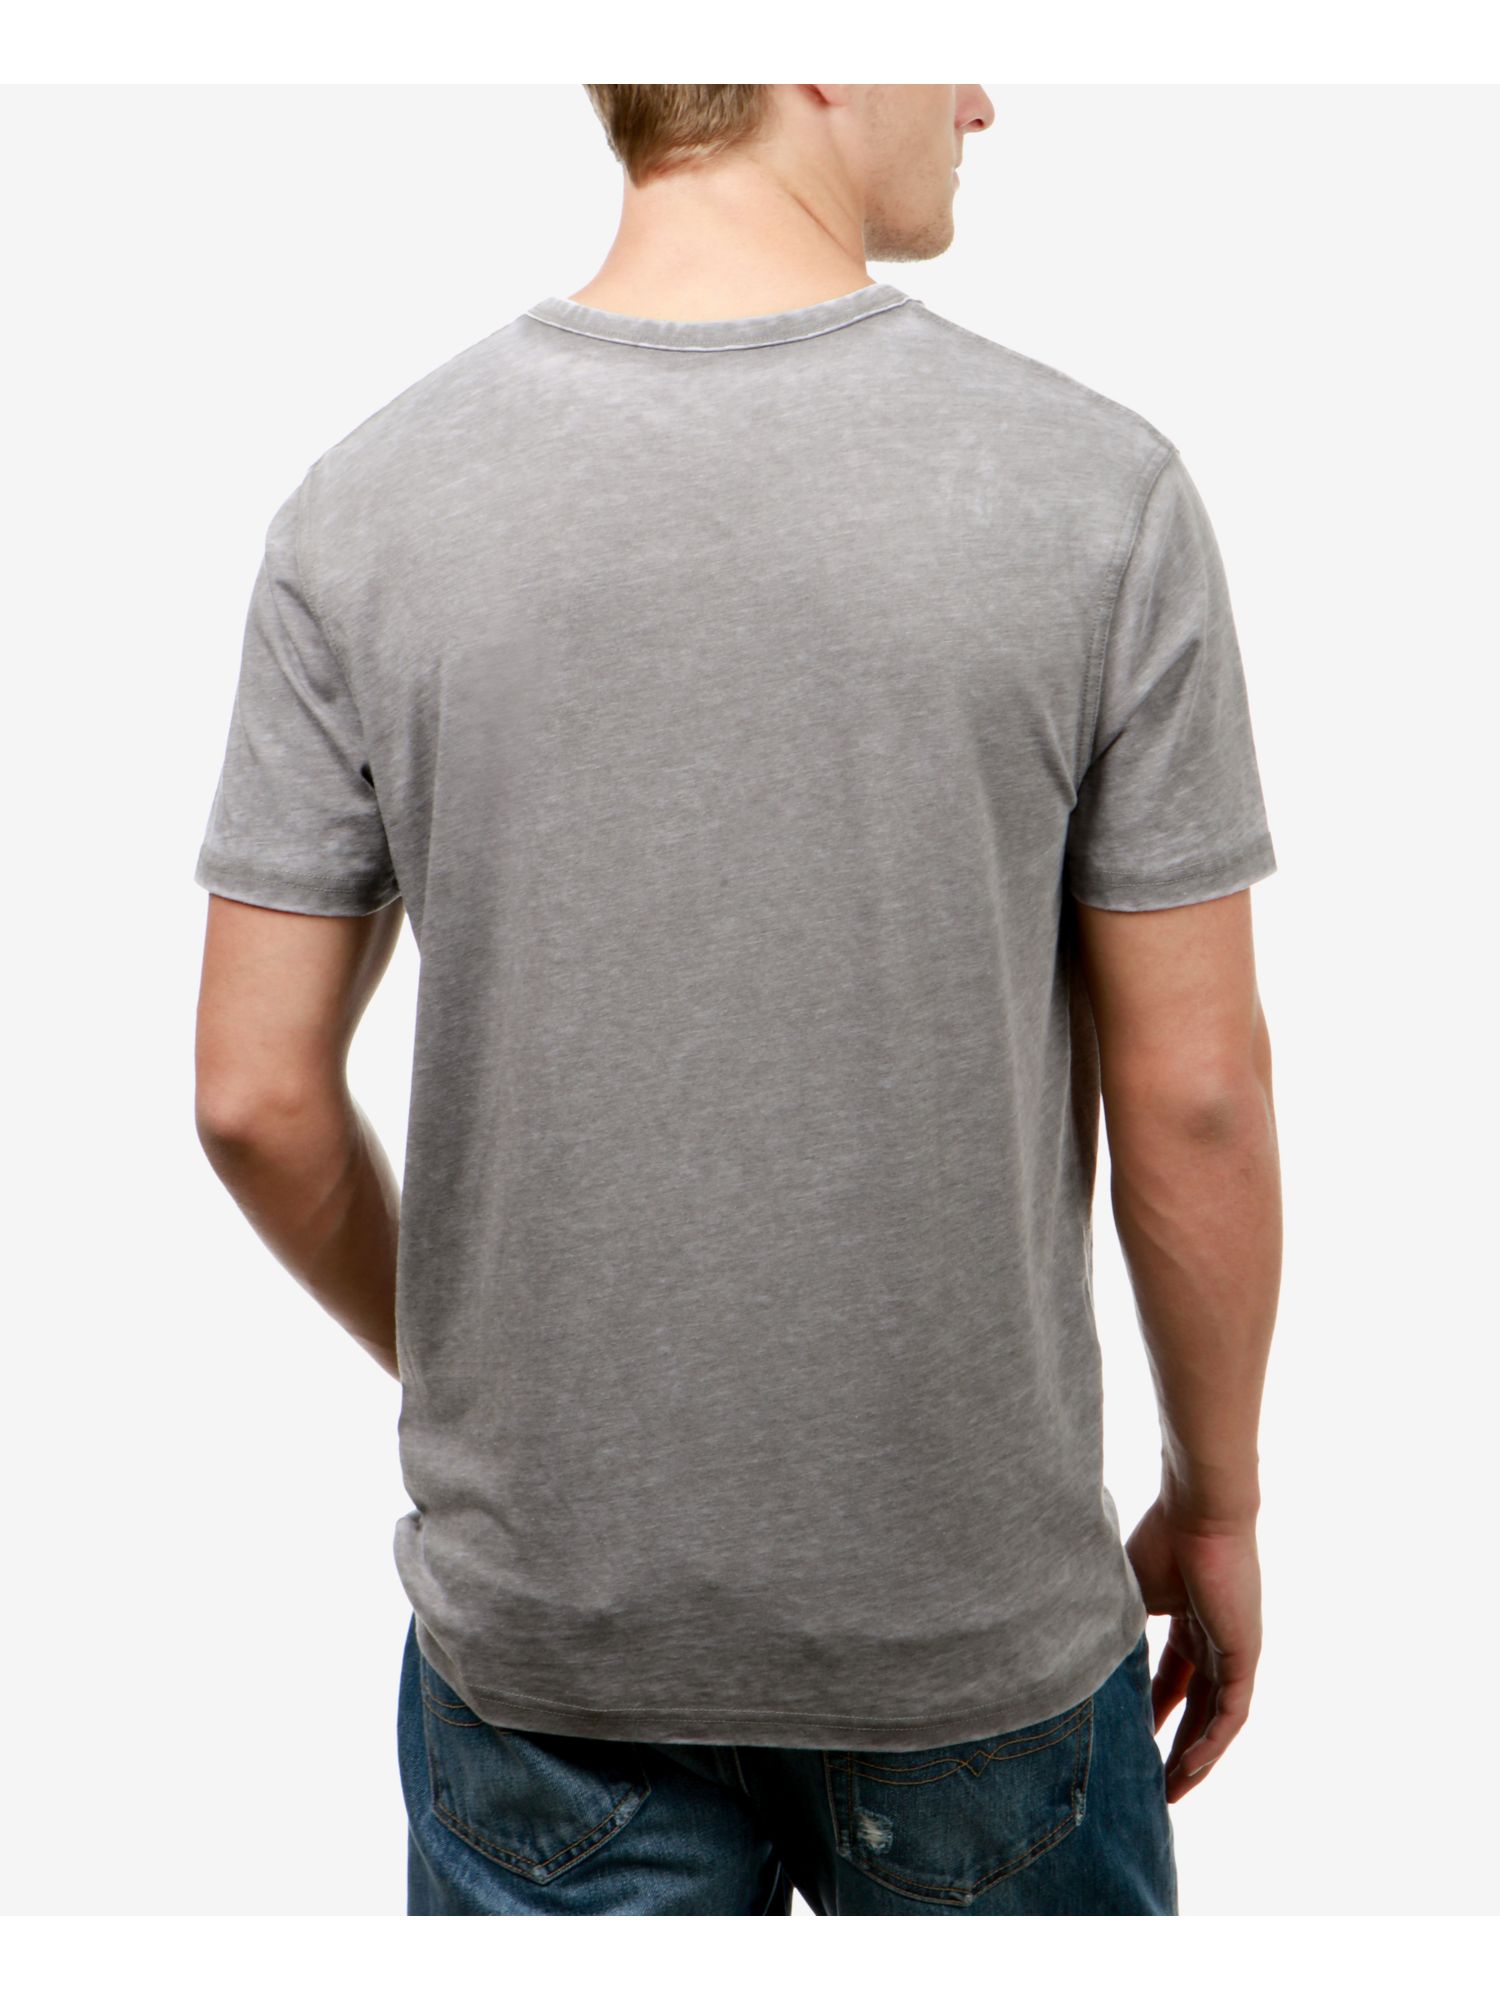 Lucky Brand Mens Burnout Short Sleeve Henley Shirt Gray L - image 2 of 2